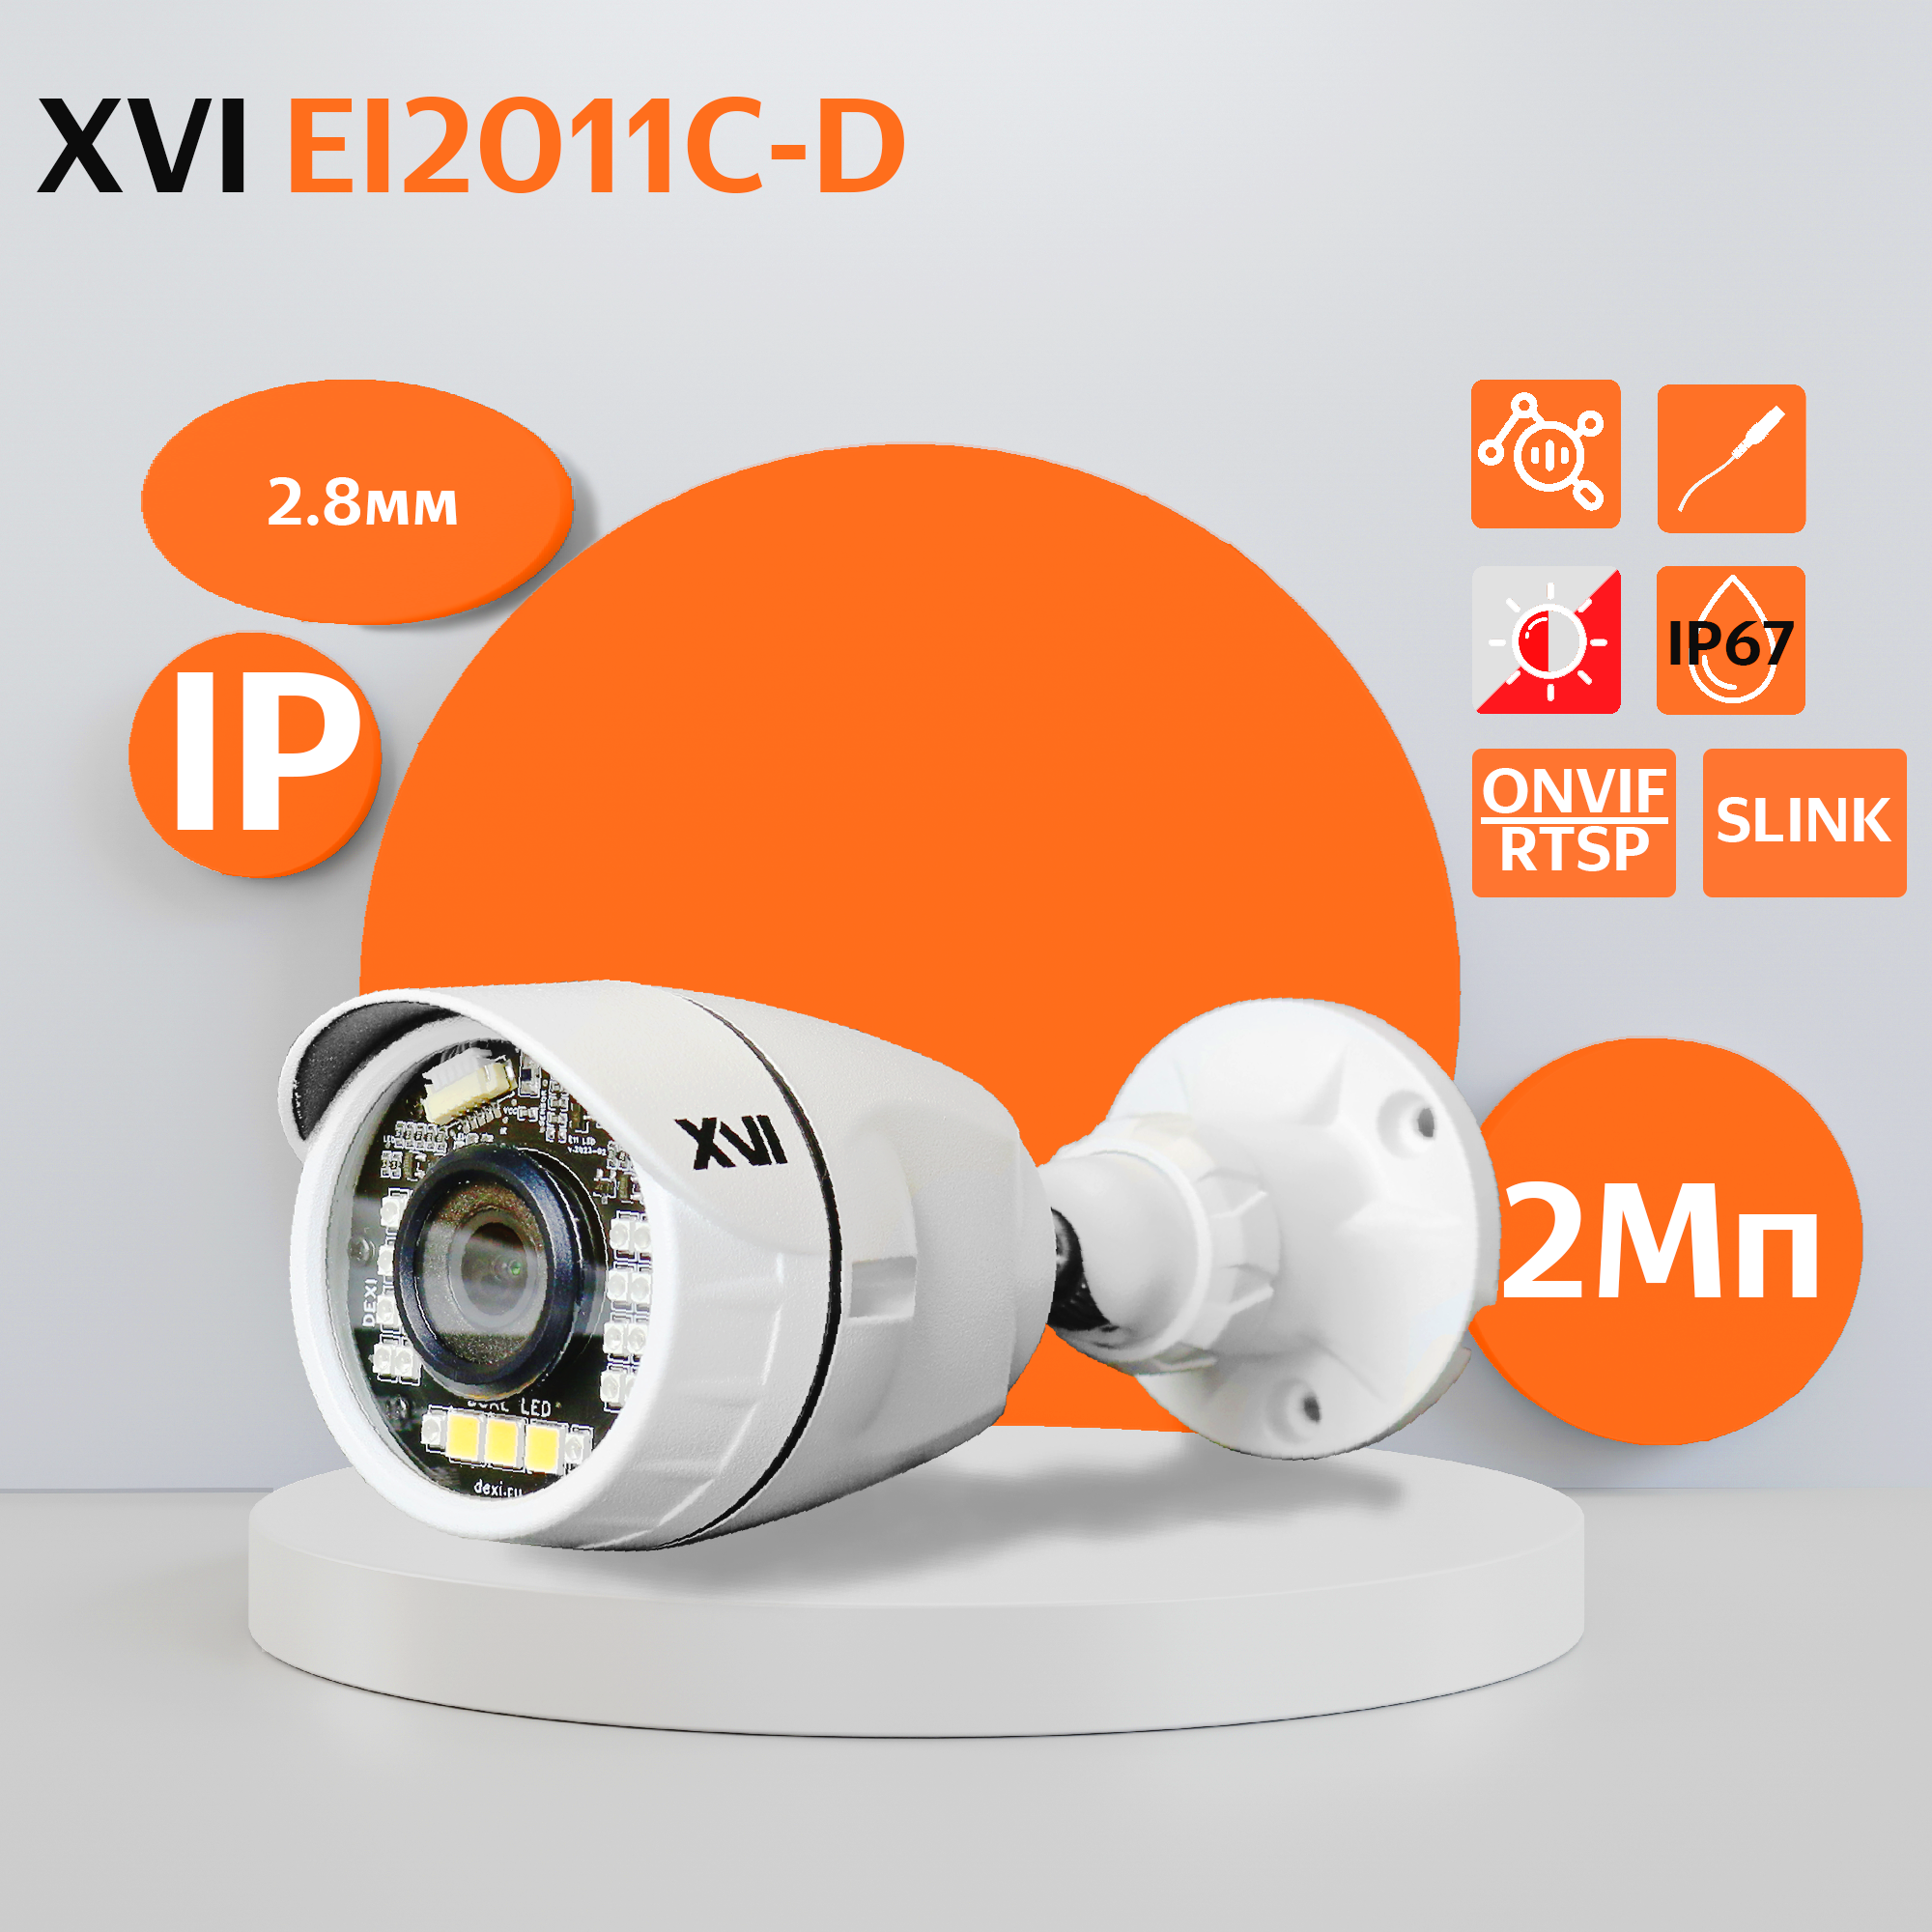 Уличная IP камера XVI EI2011C-D2.8, 2Мп, фикс.объектив, Dual Led f= 2.8мм (H94,V52) уличная купольная ip камера xvi vi5305cap d sd 5мп фикс объектив poe dual led слот mi